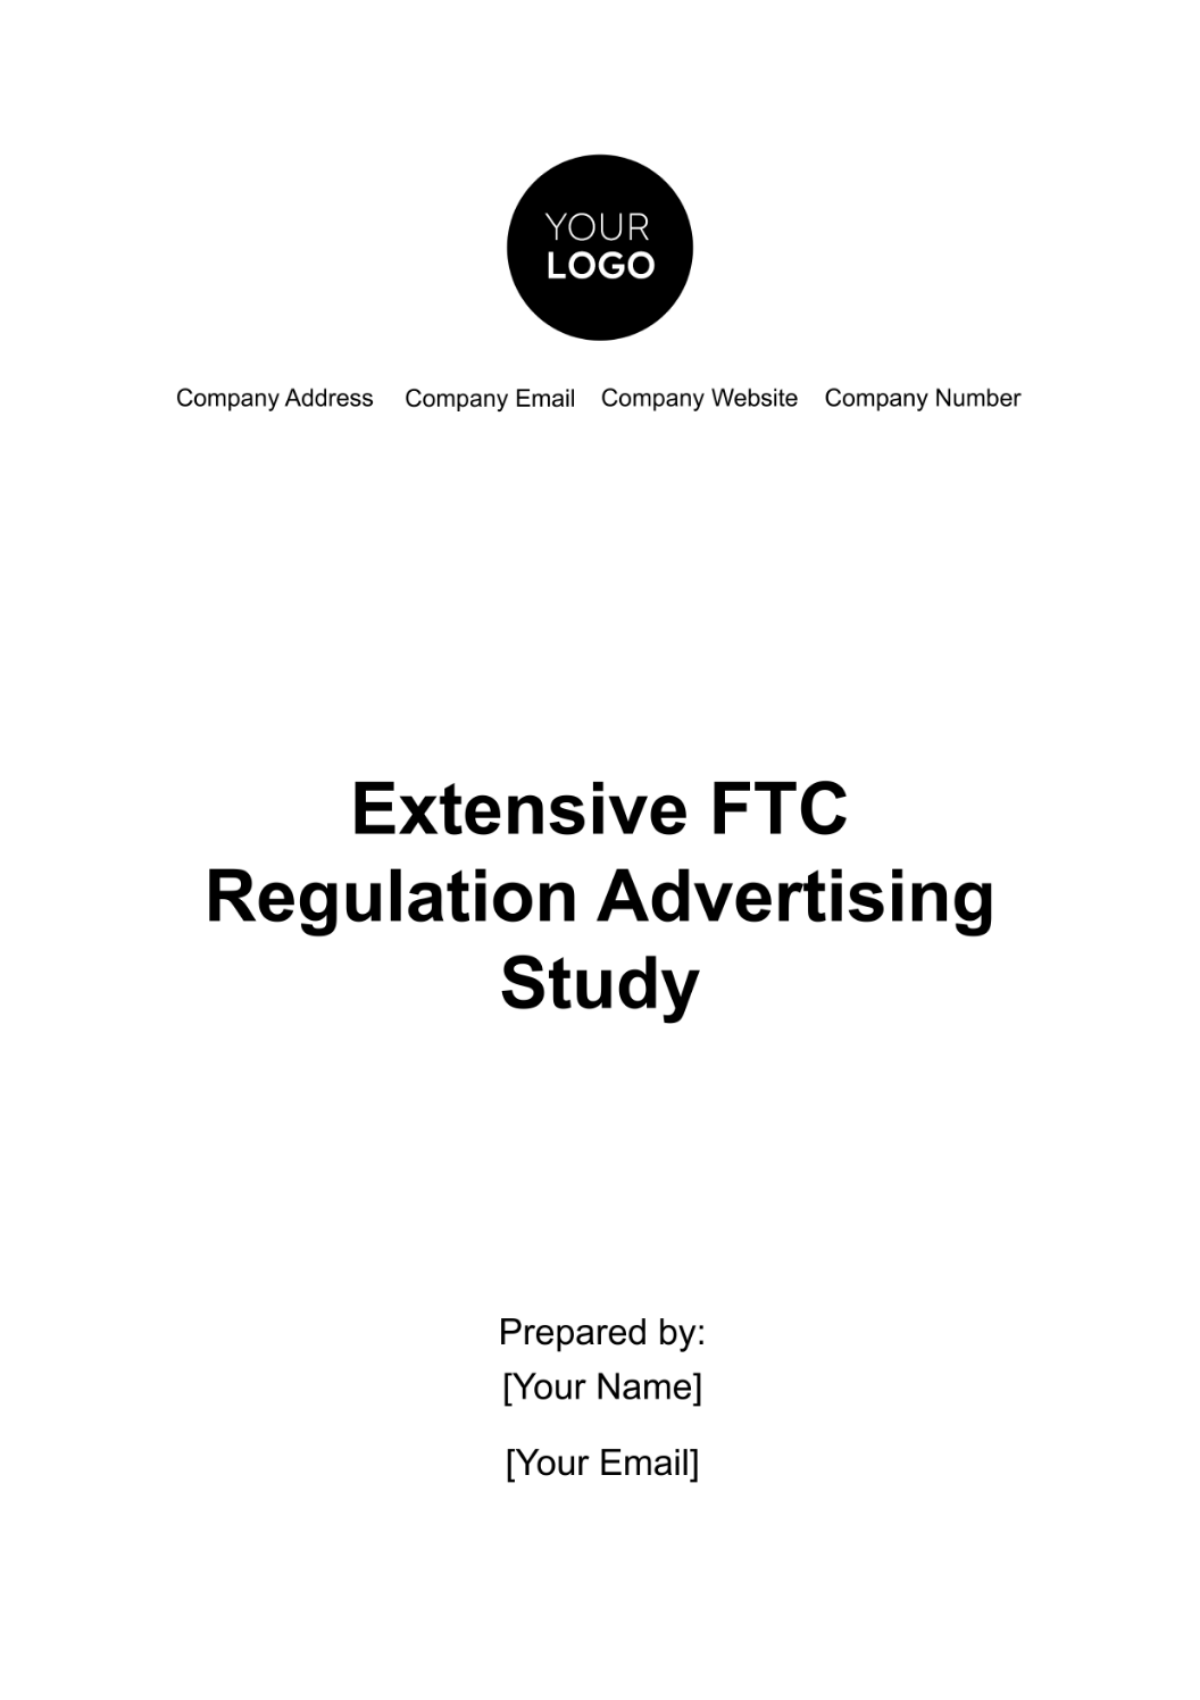 Extensive FTC Regulation Advertising Study Template